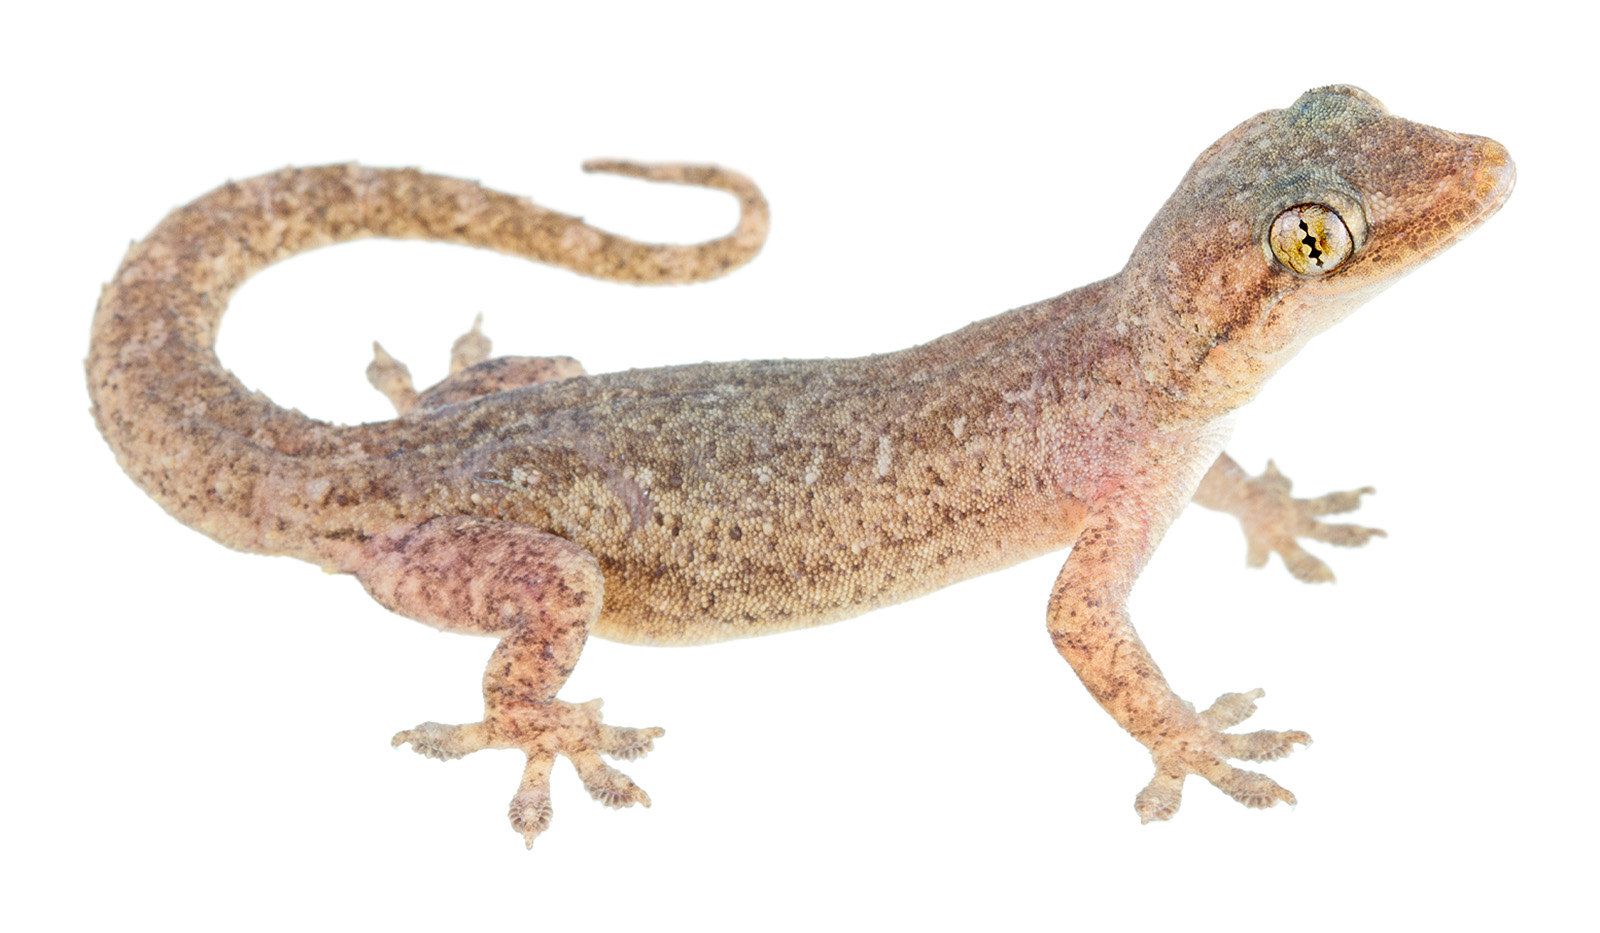 Adult Hemidactylus frenatus